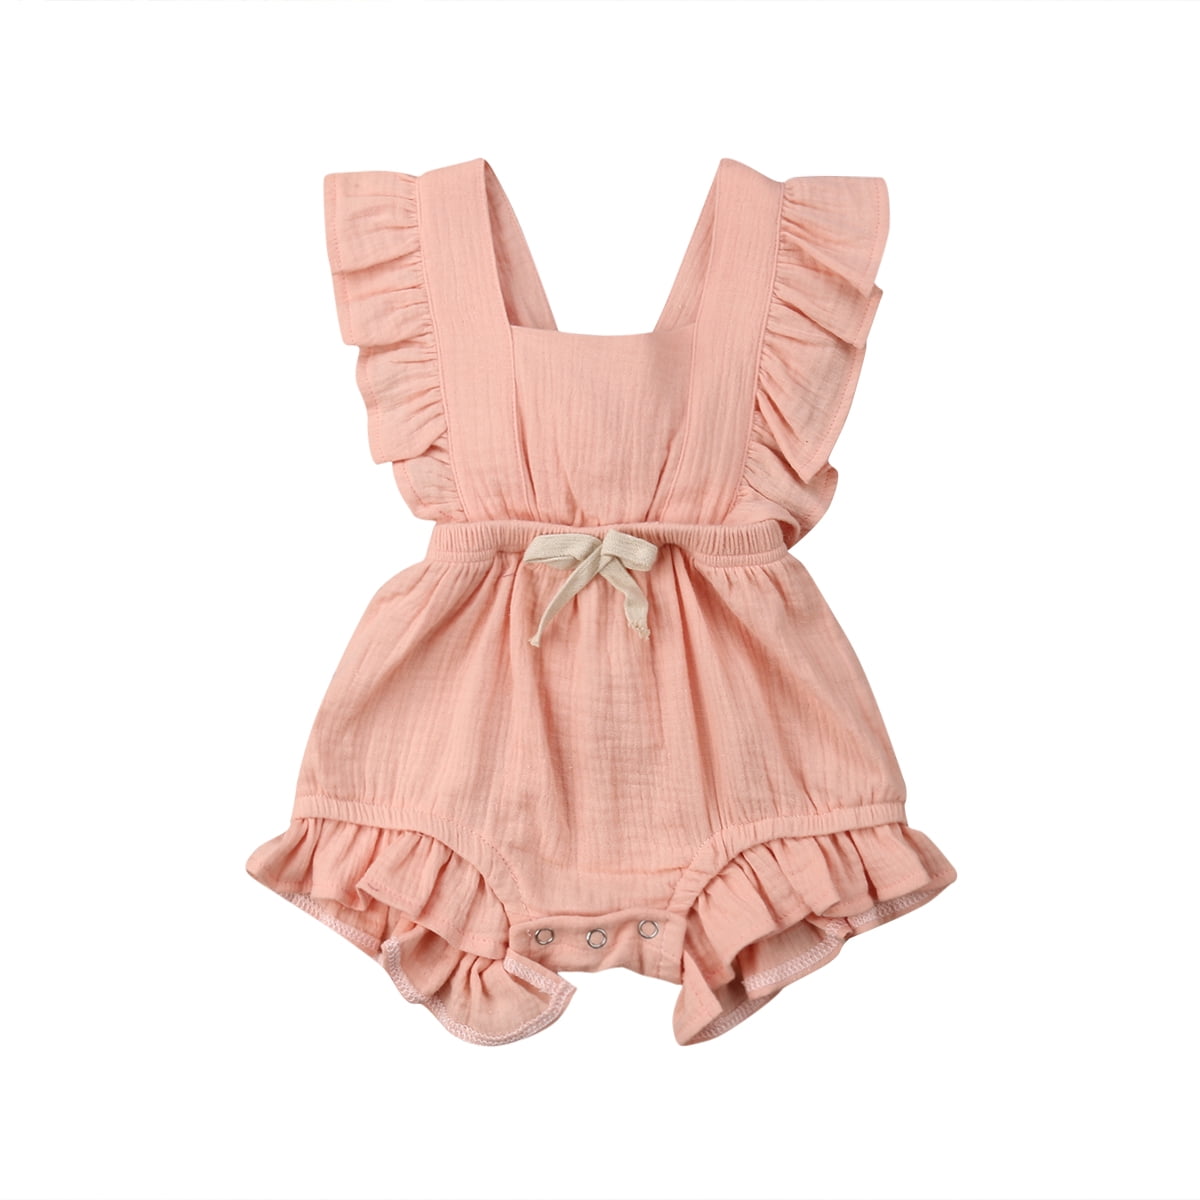 Infant Baby Ruffle Cotton Bowknot Newborn Bodysuit Playsuit Romper Girl Clothes 